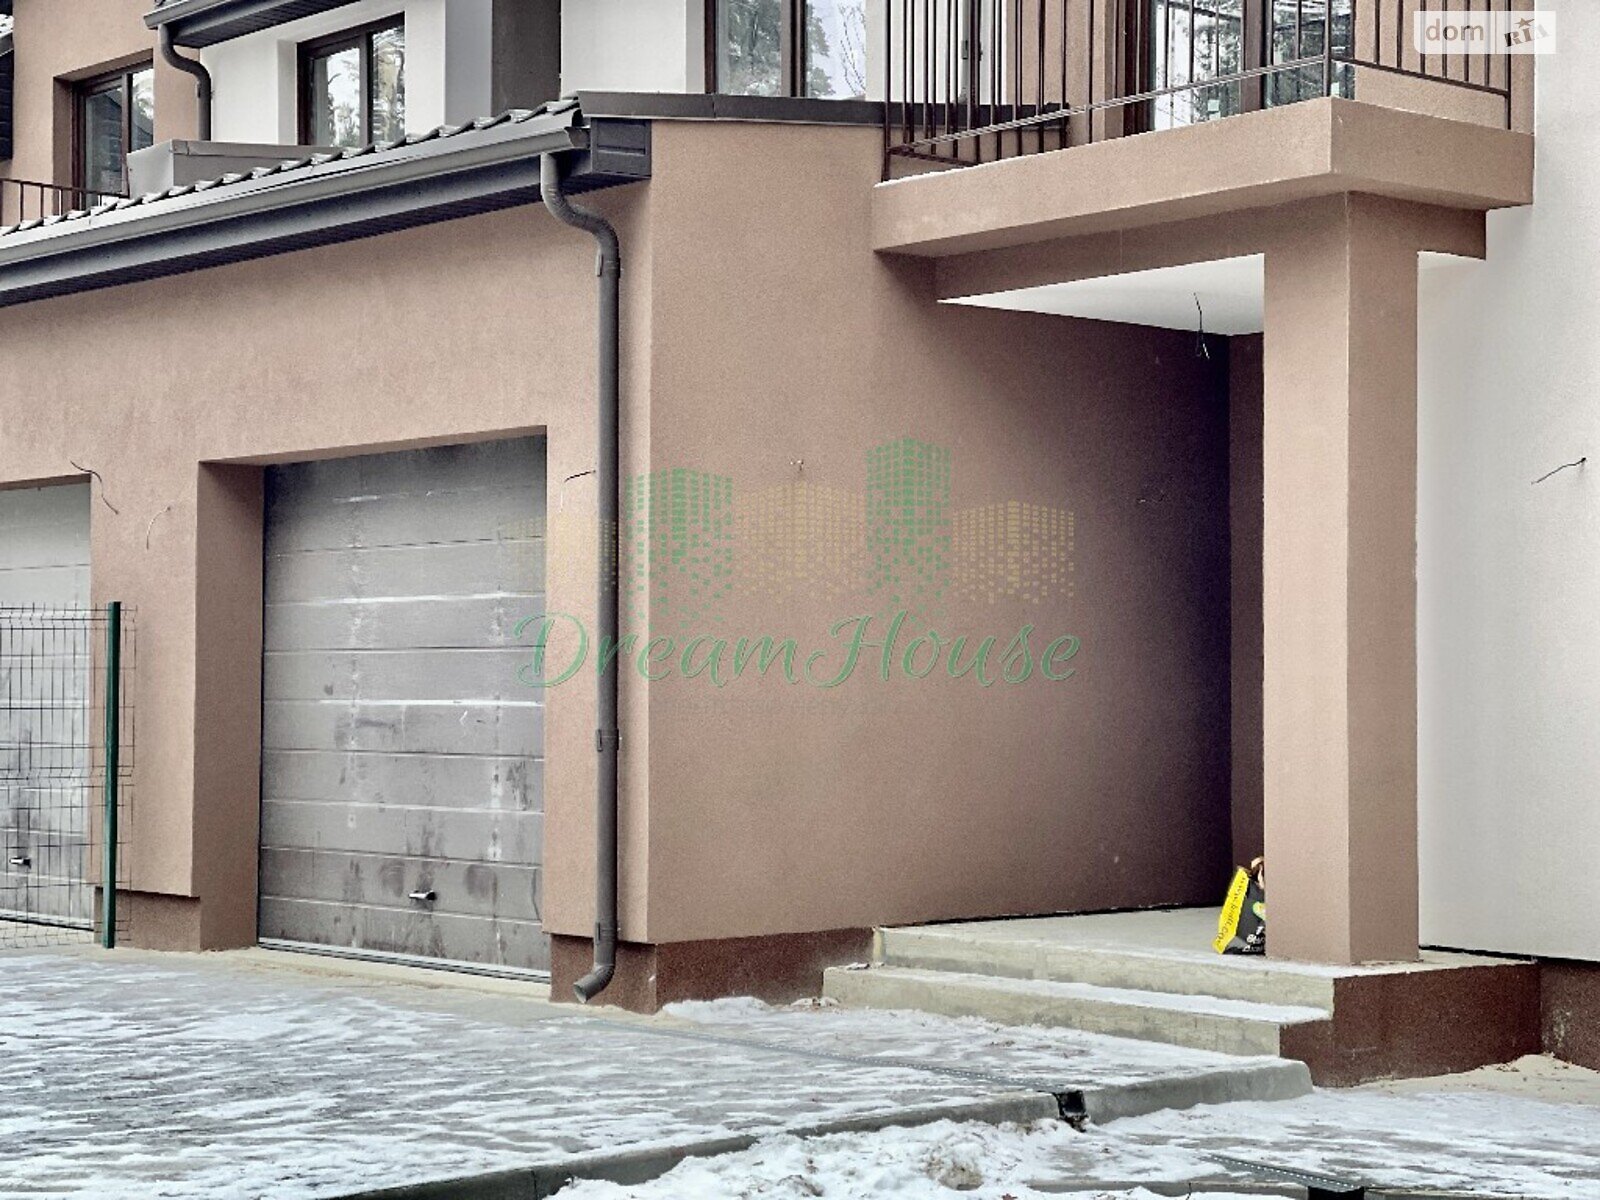 Продажа части дома в Ворзеле, улица Тургенева, 4 комнаты фото 1